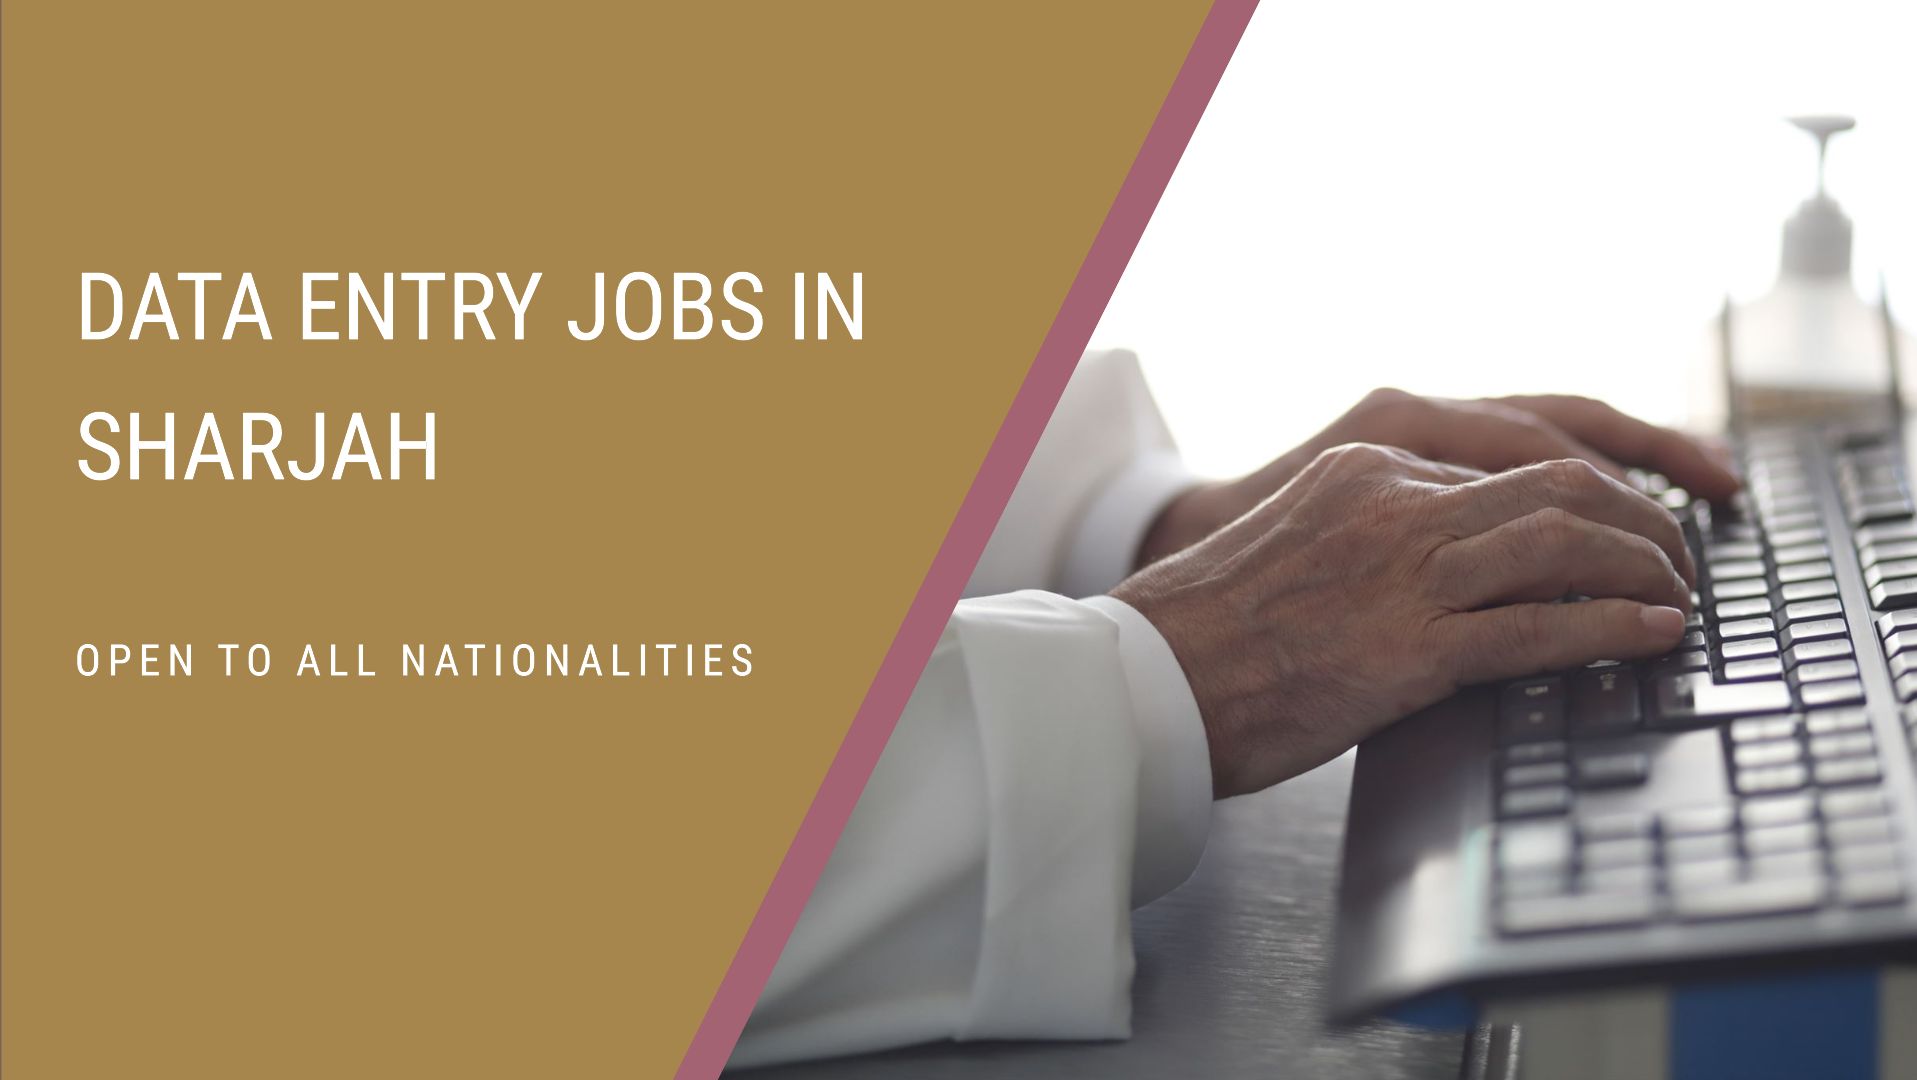 Data Entry job in Sharjah | All Nationalities